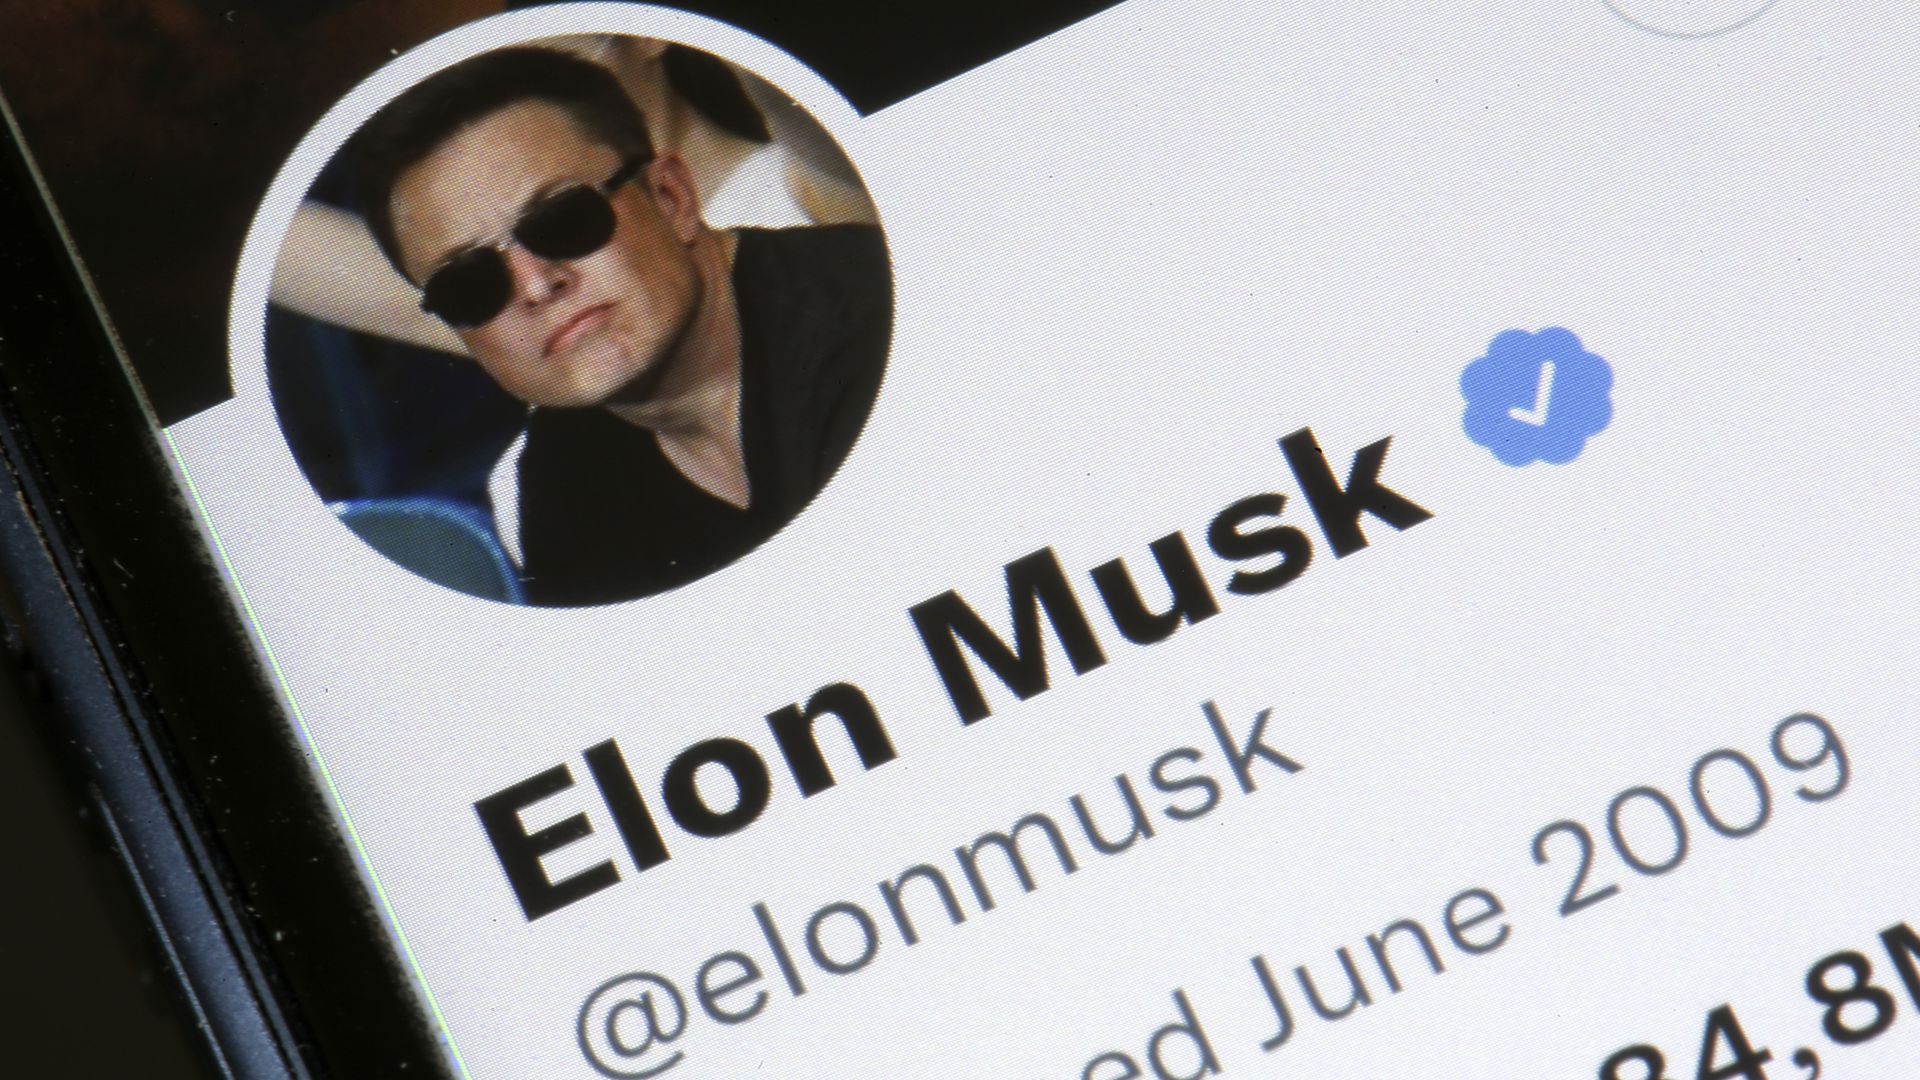 Elon Musk's Twitter profile page.